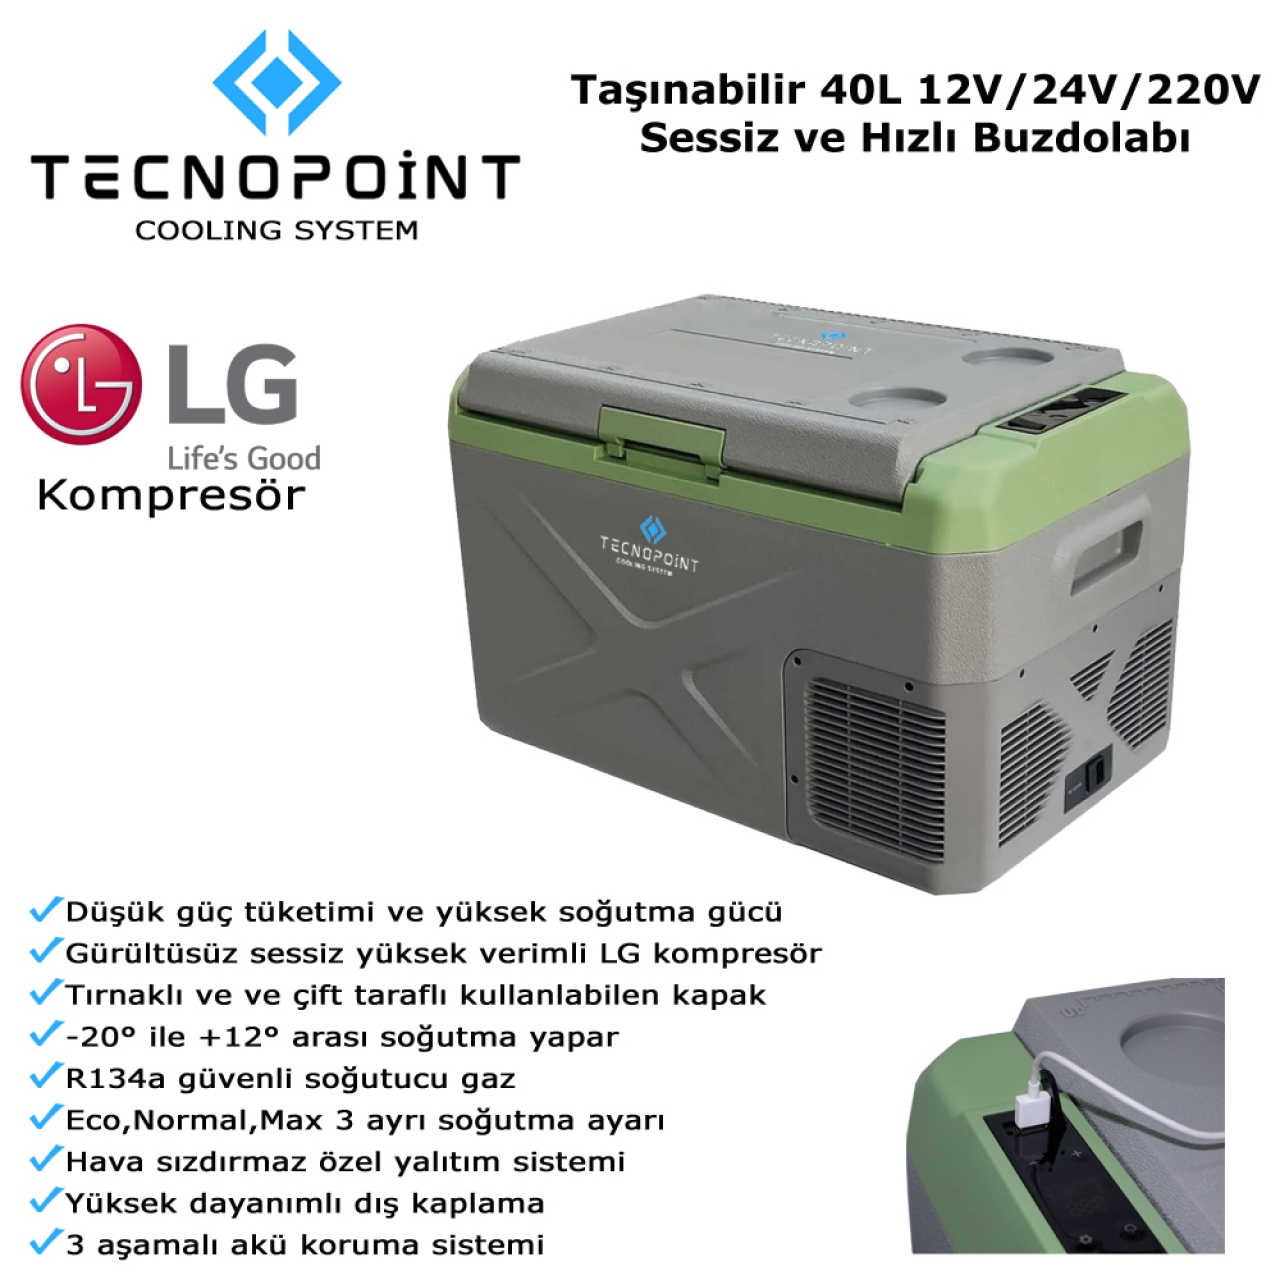 Tecnopoint 40 Litre Taşınabilir Araç Buzdolabı 12V/24V/220V Uyumlu